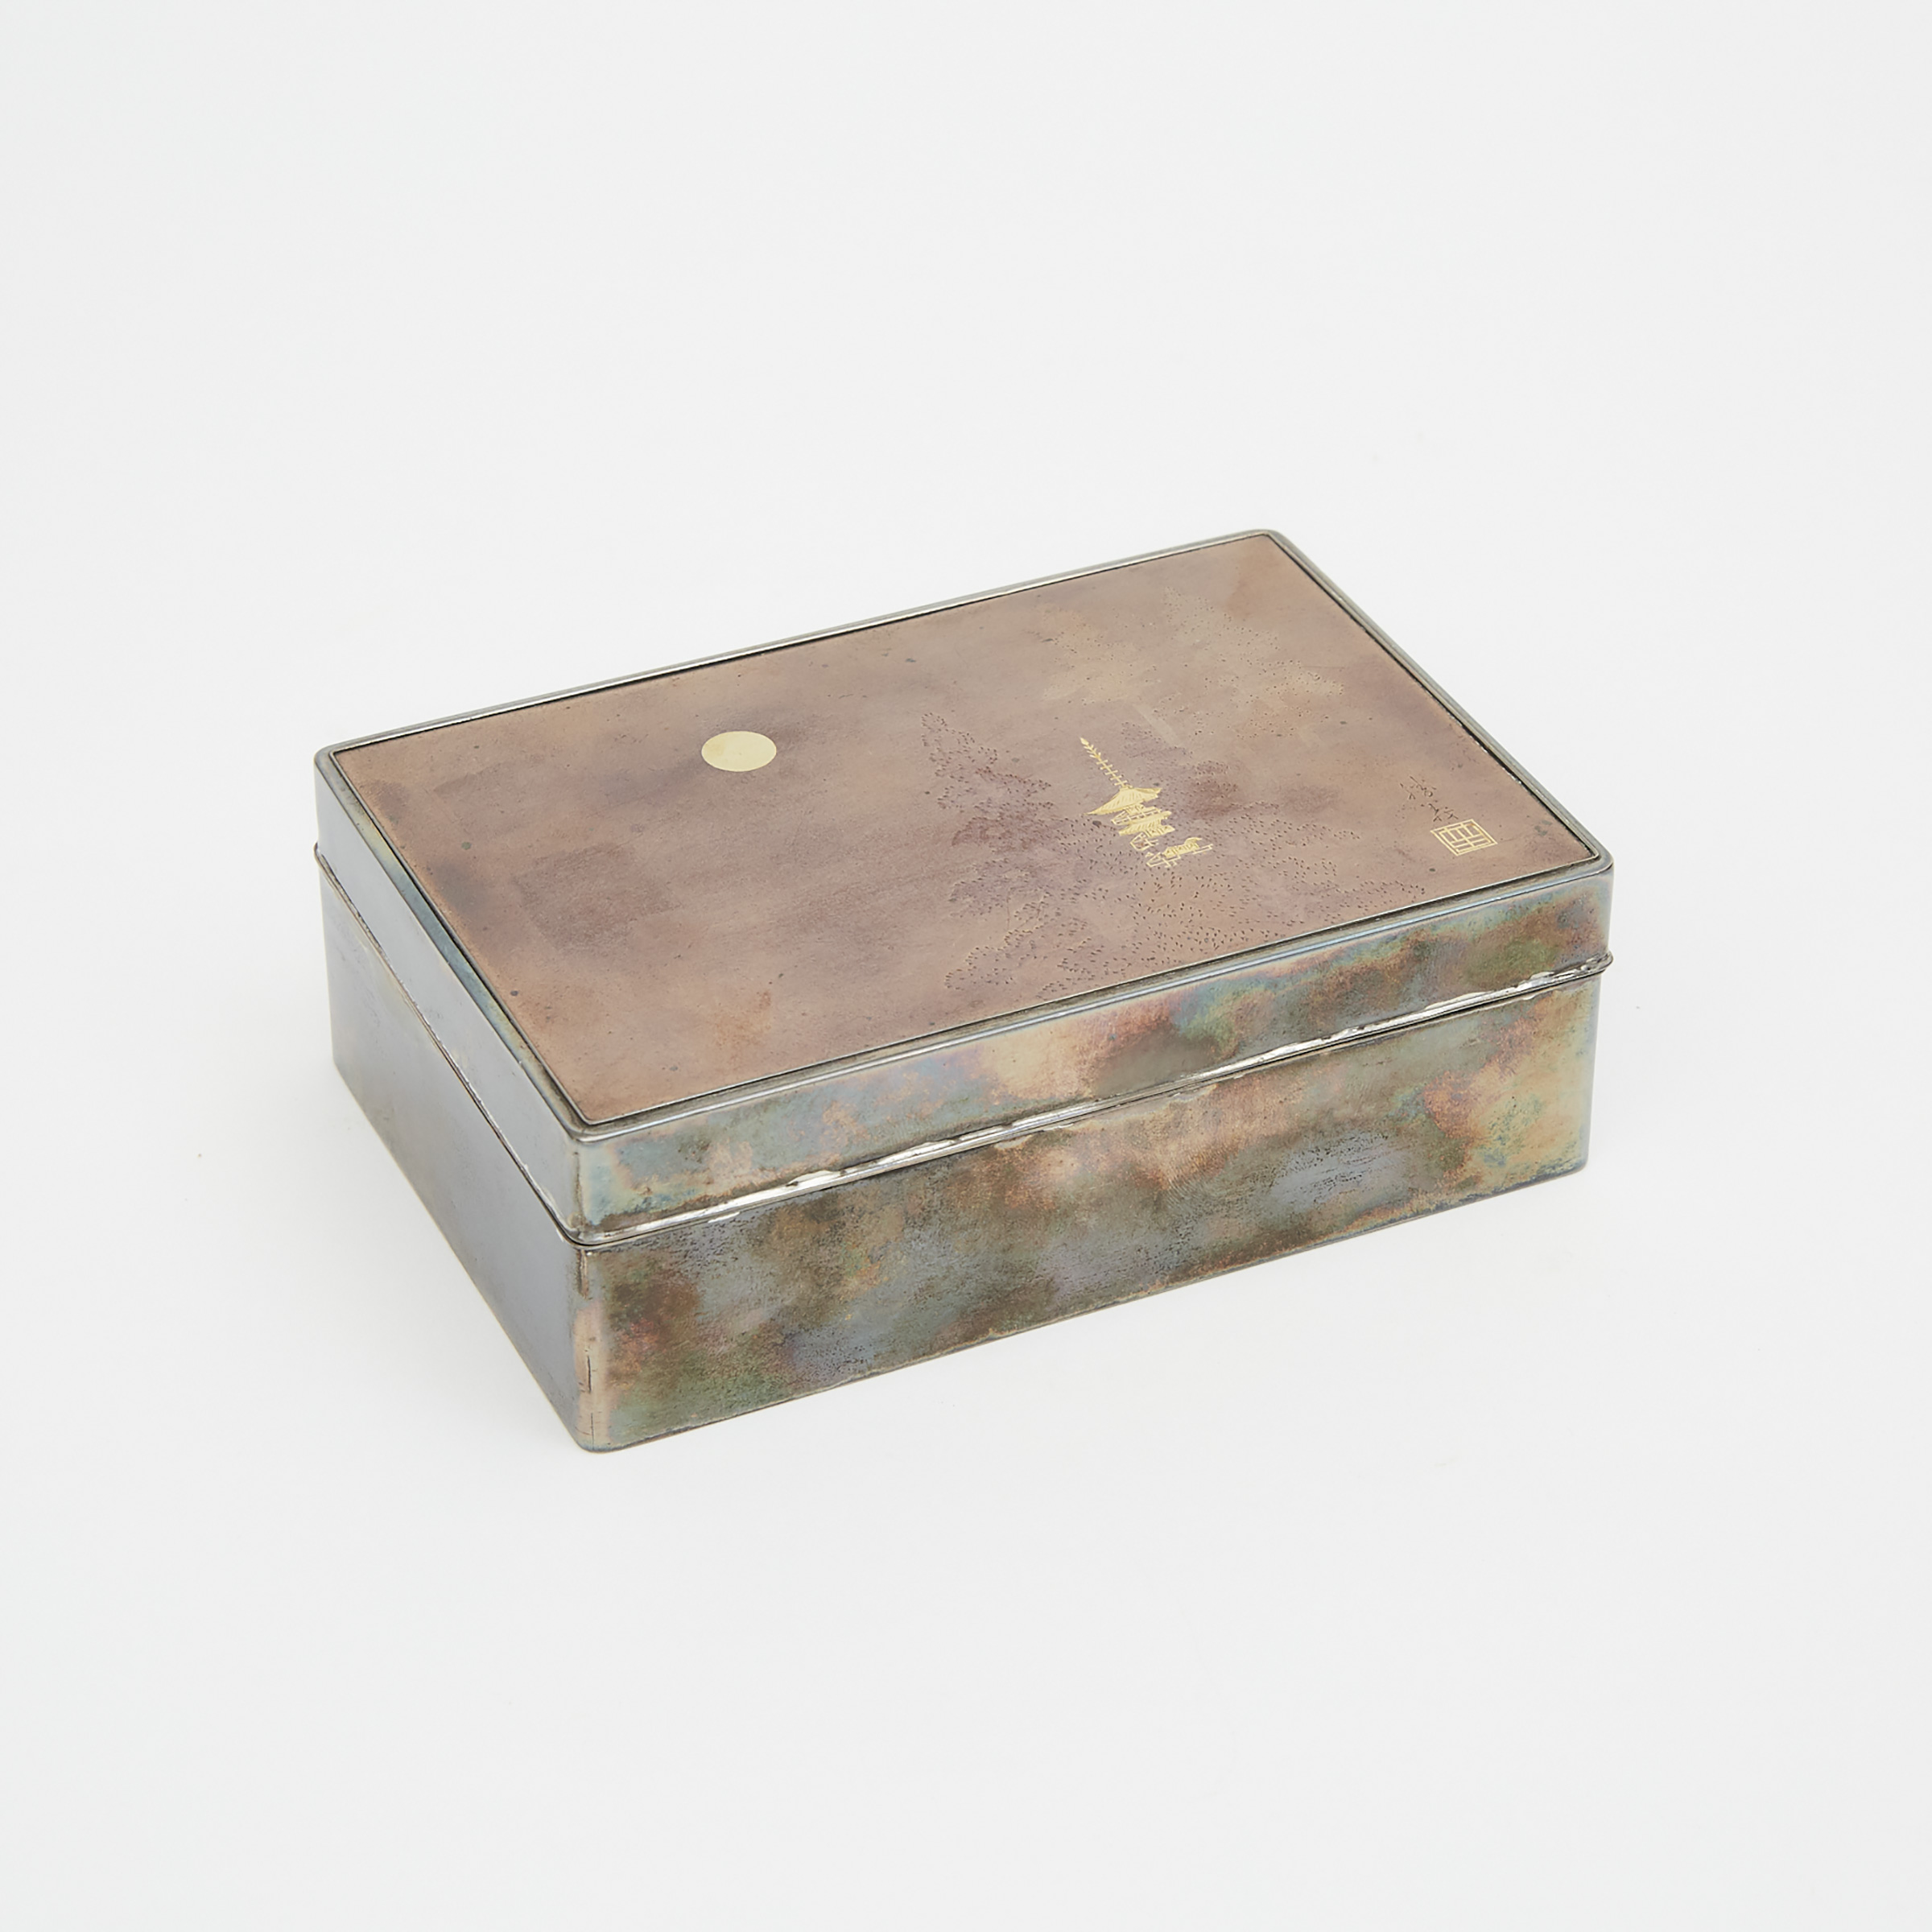 A Japanese Inlaid Silver Box, Signed Miyamoto, Meiji Period